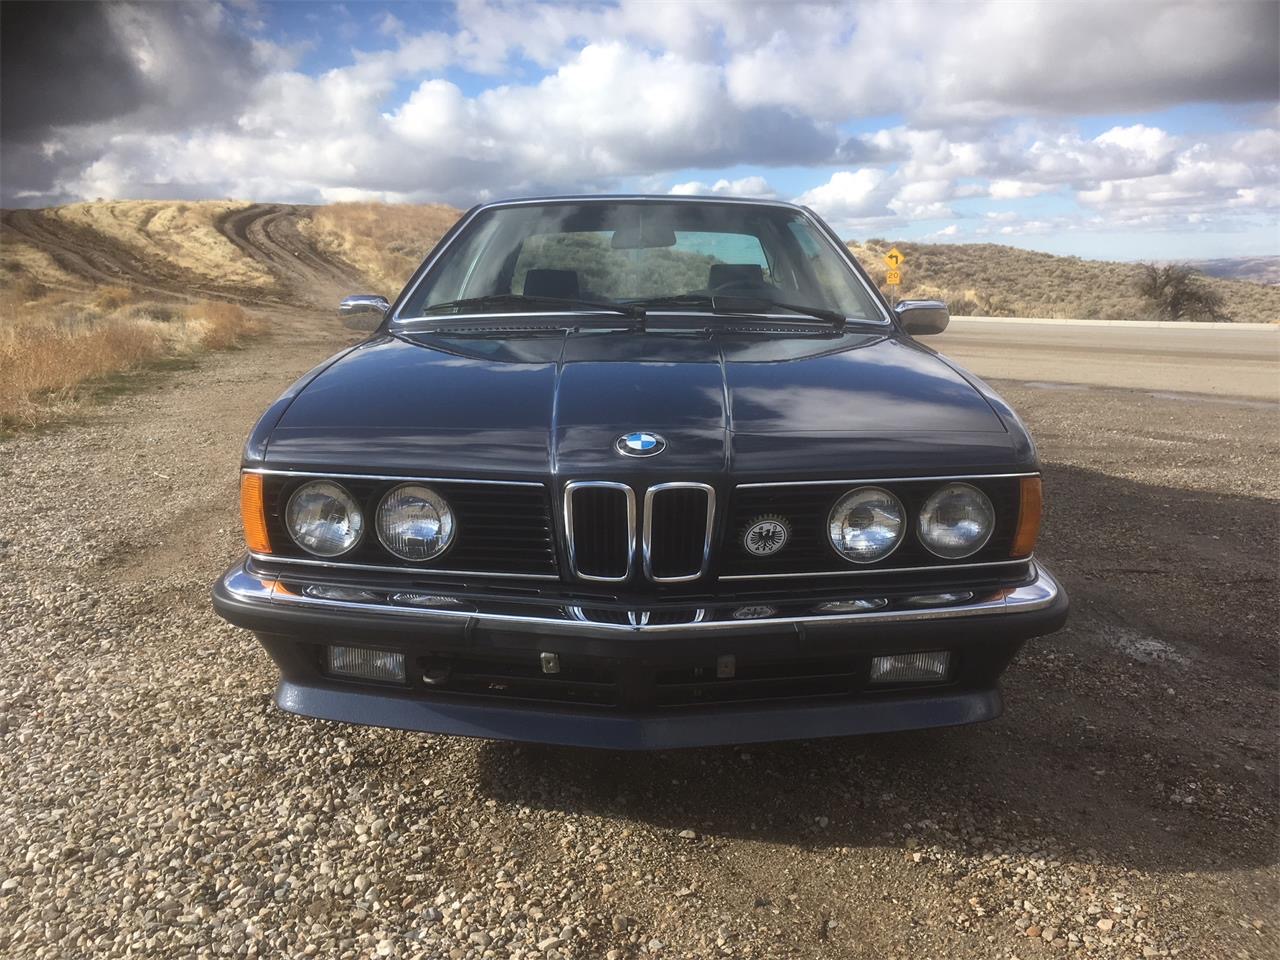 BMW, Bimmer beauty, 1984 635CSI, ClassicCars.com Journal